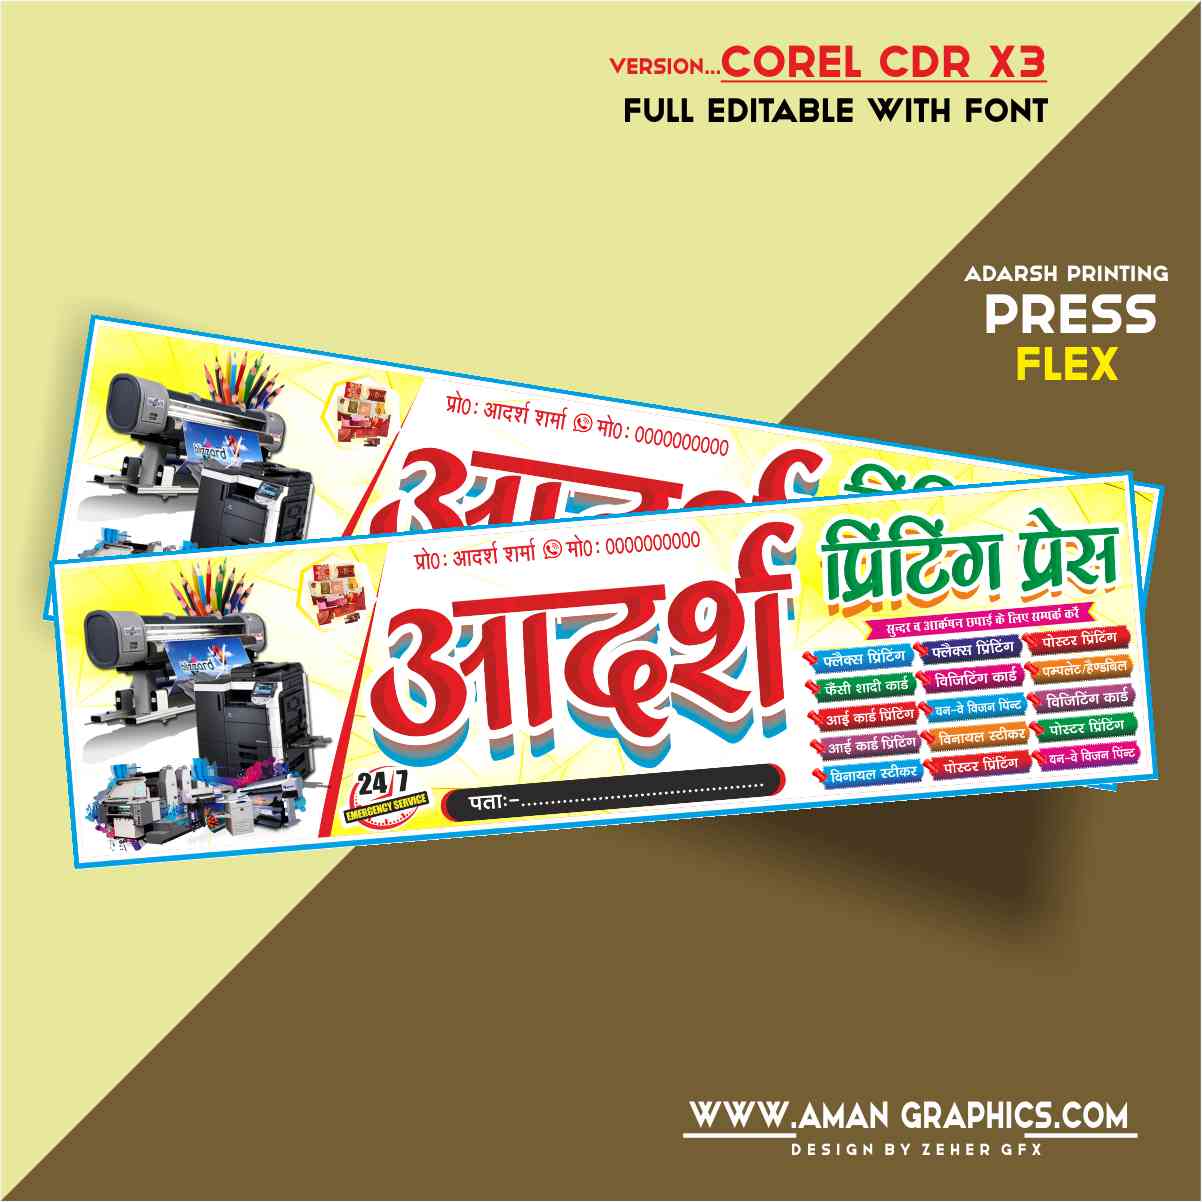 Adarsh Printing Press Banner Design Cdr File FLEX BANNER FLEX